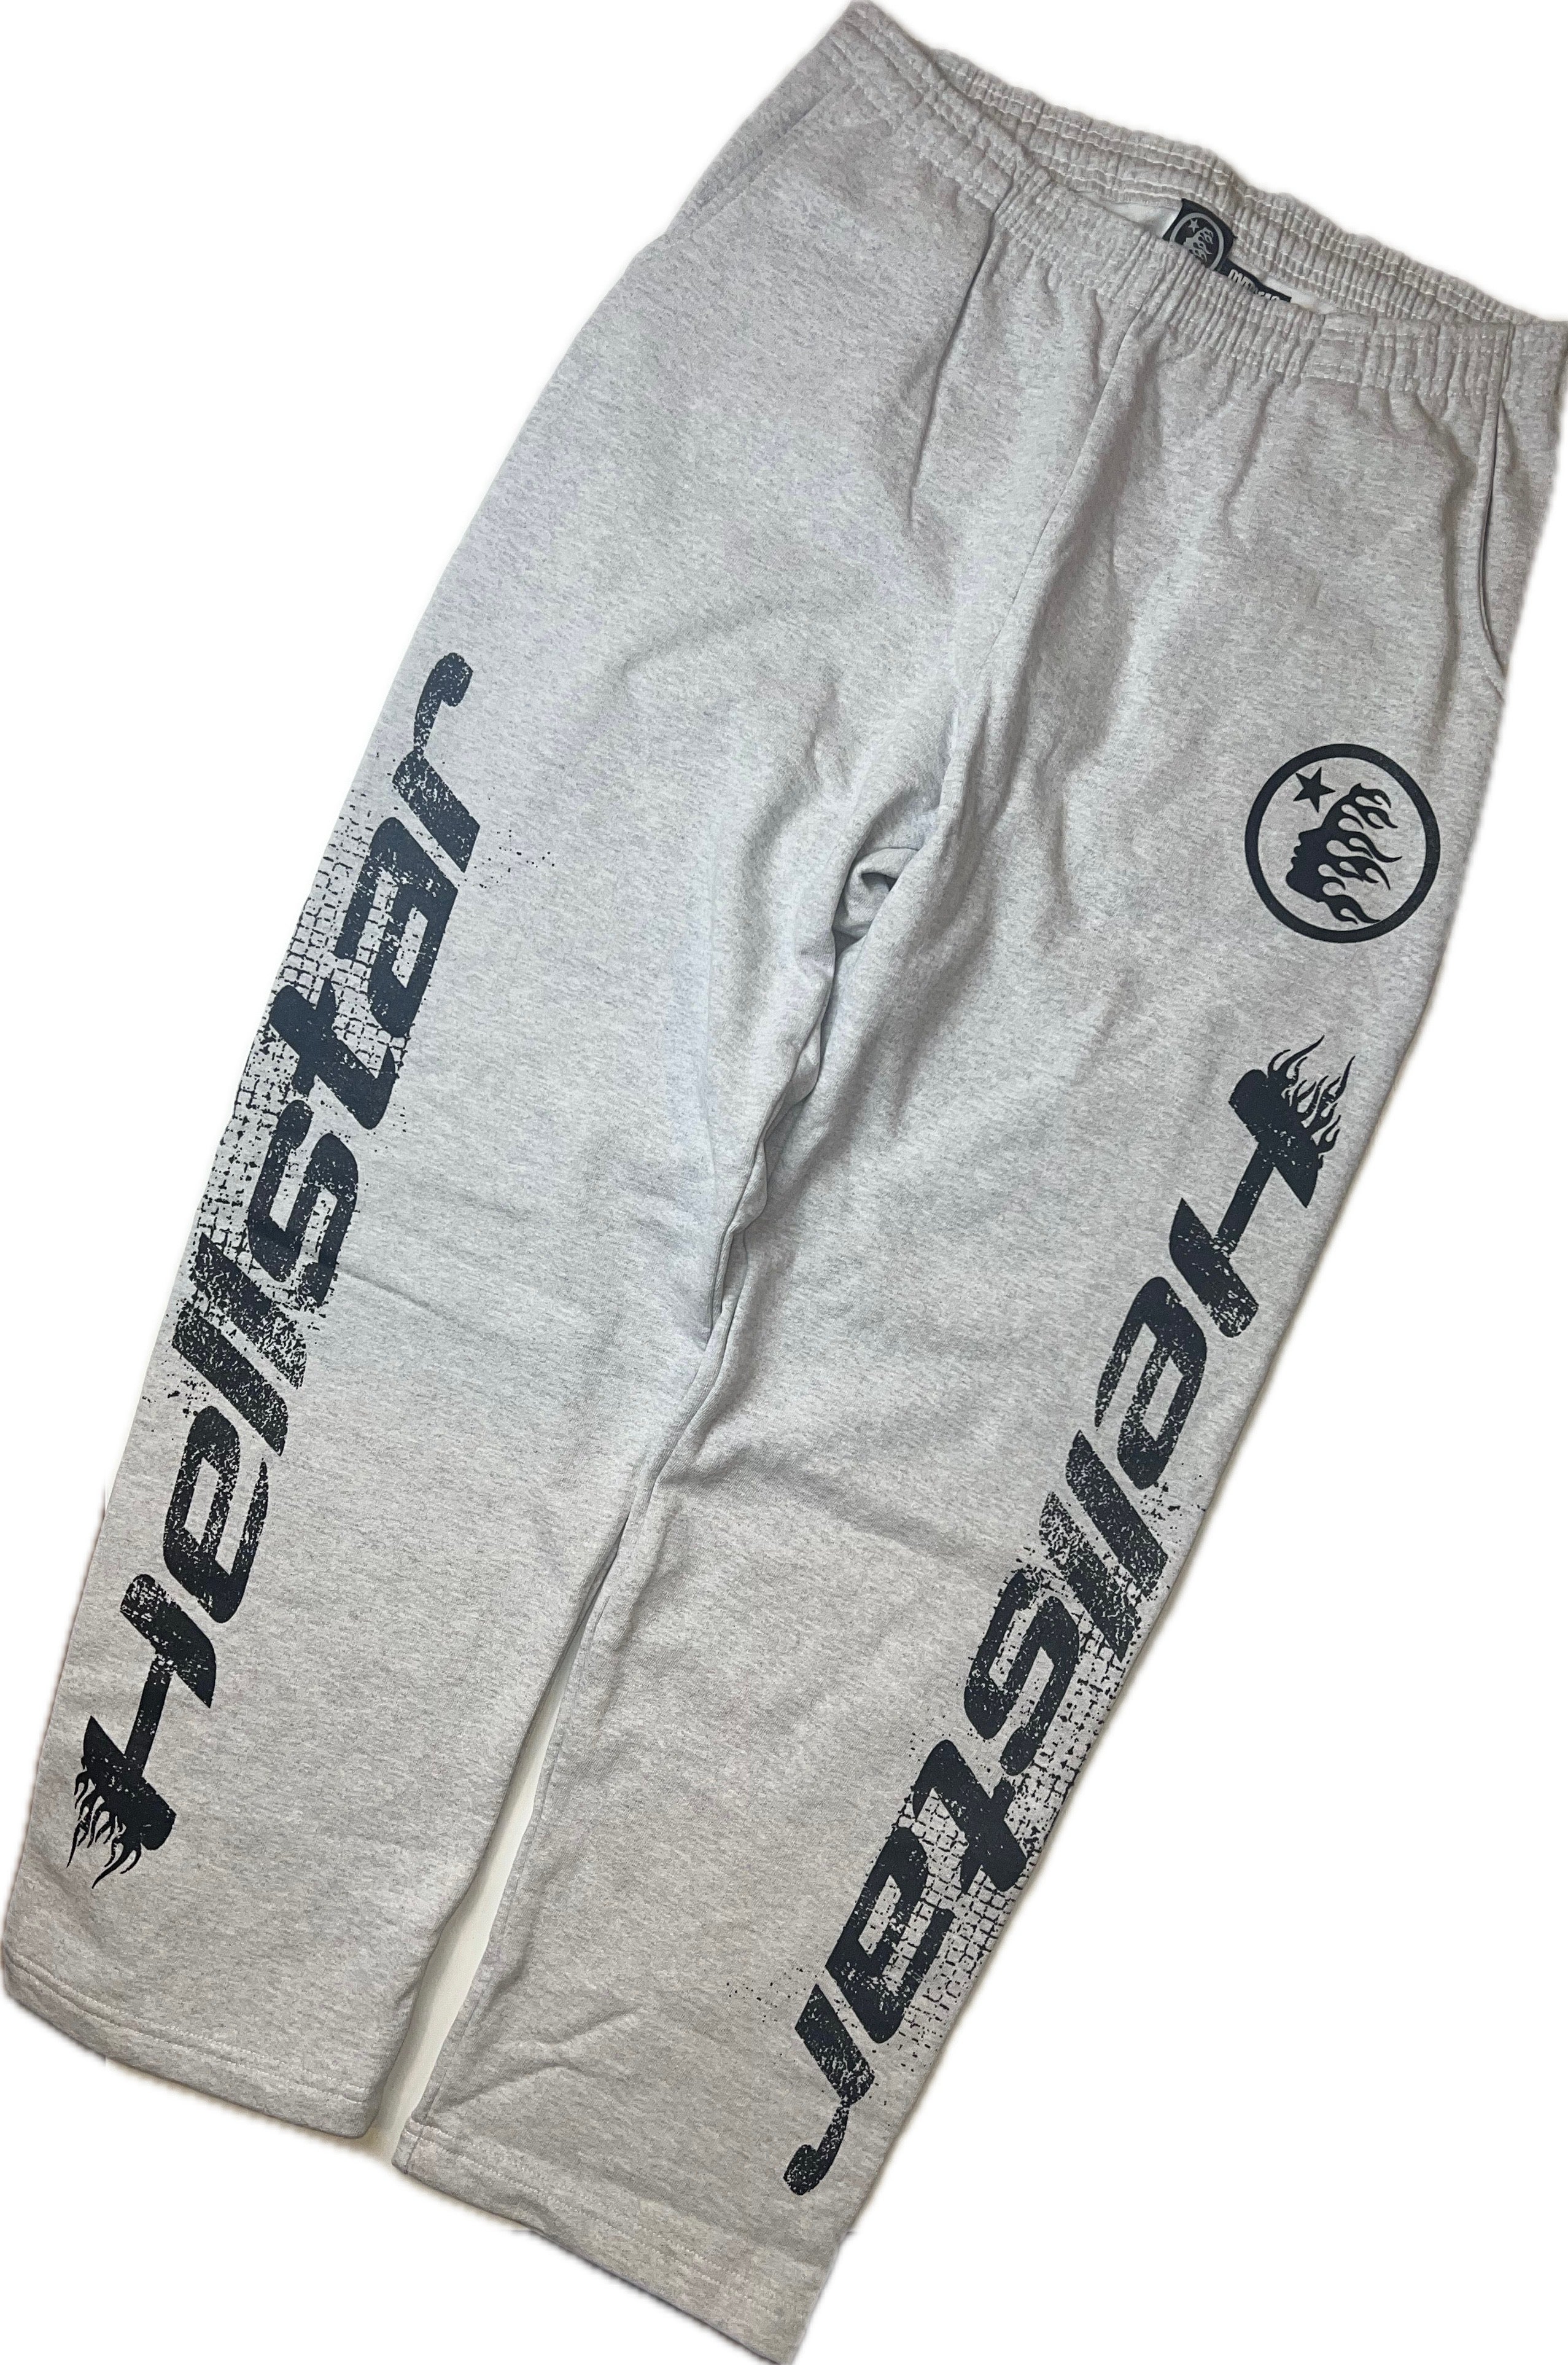 Hellstar Overseas Exclusive Sweatpants Grey/Black